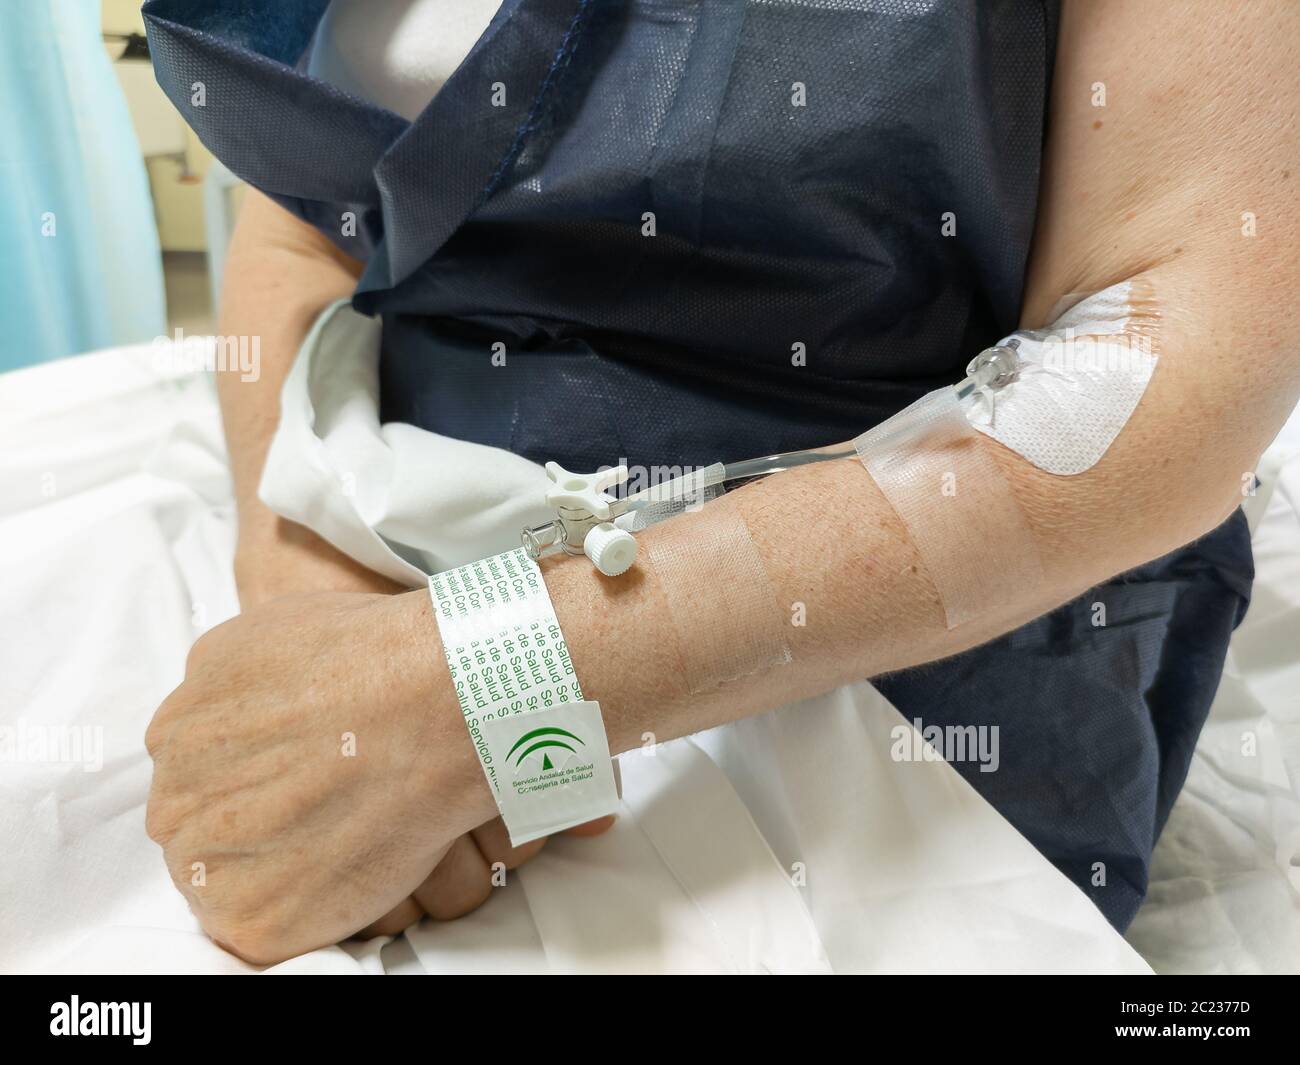 Huelva, Spain - June 16, 2020: Hands of female patient with a Peripheral venous catheter in the vein inside hospital Juan Ramon Jimenez in Huelva, Spa Stock Photo